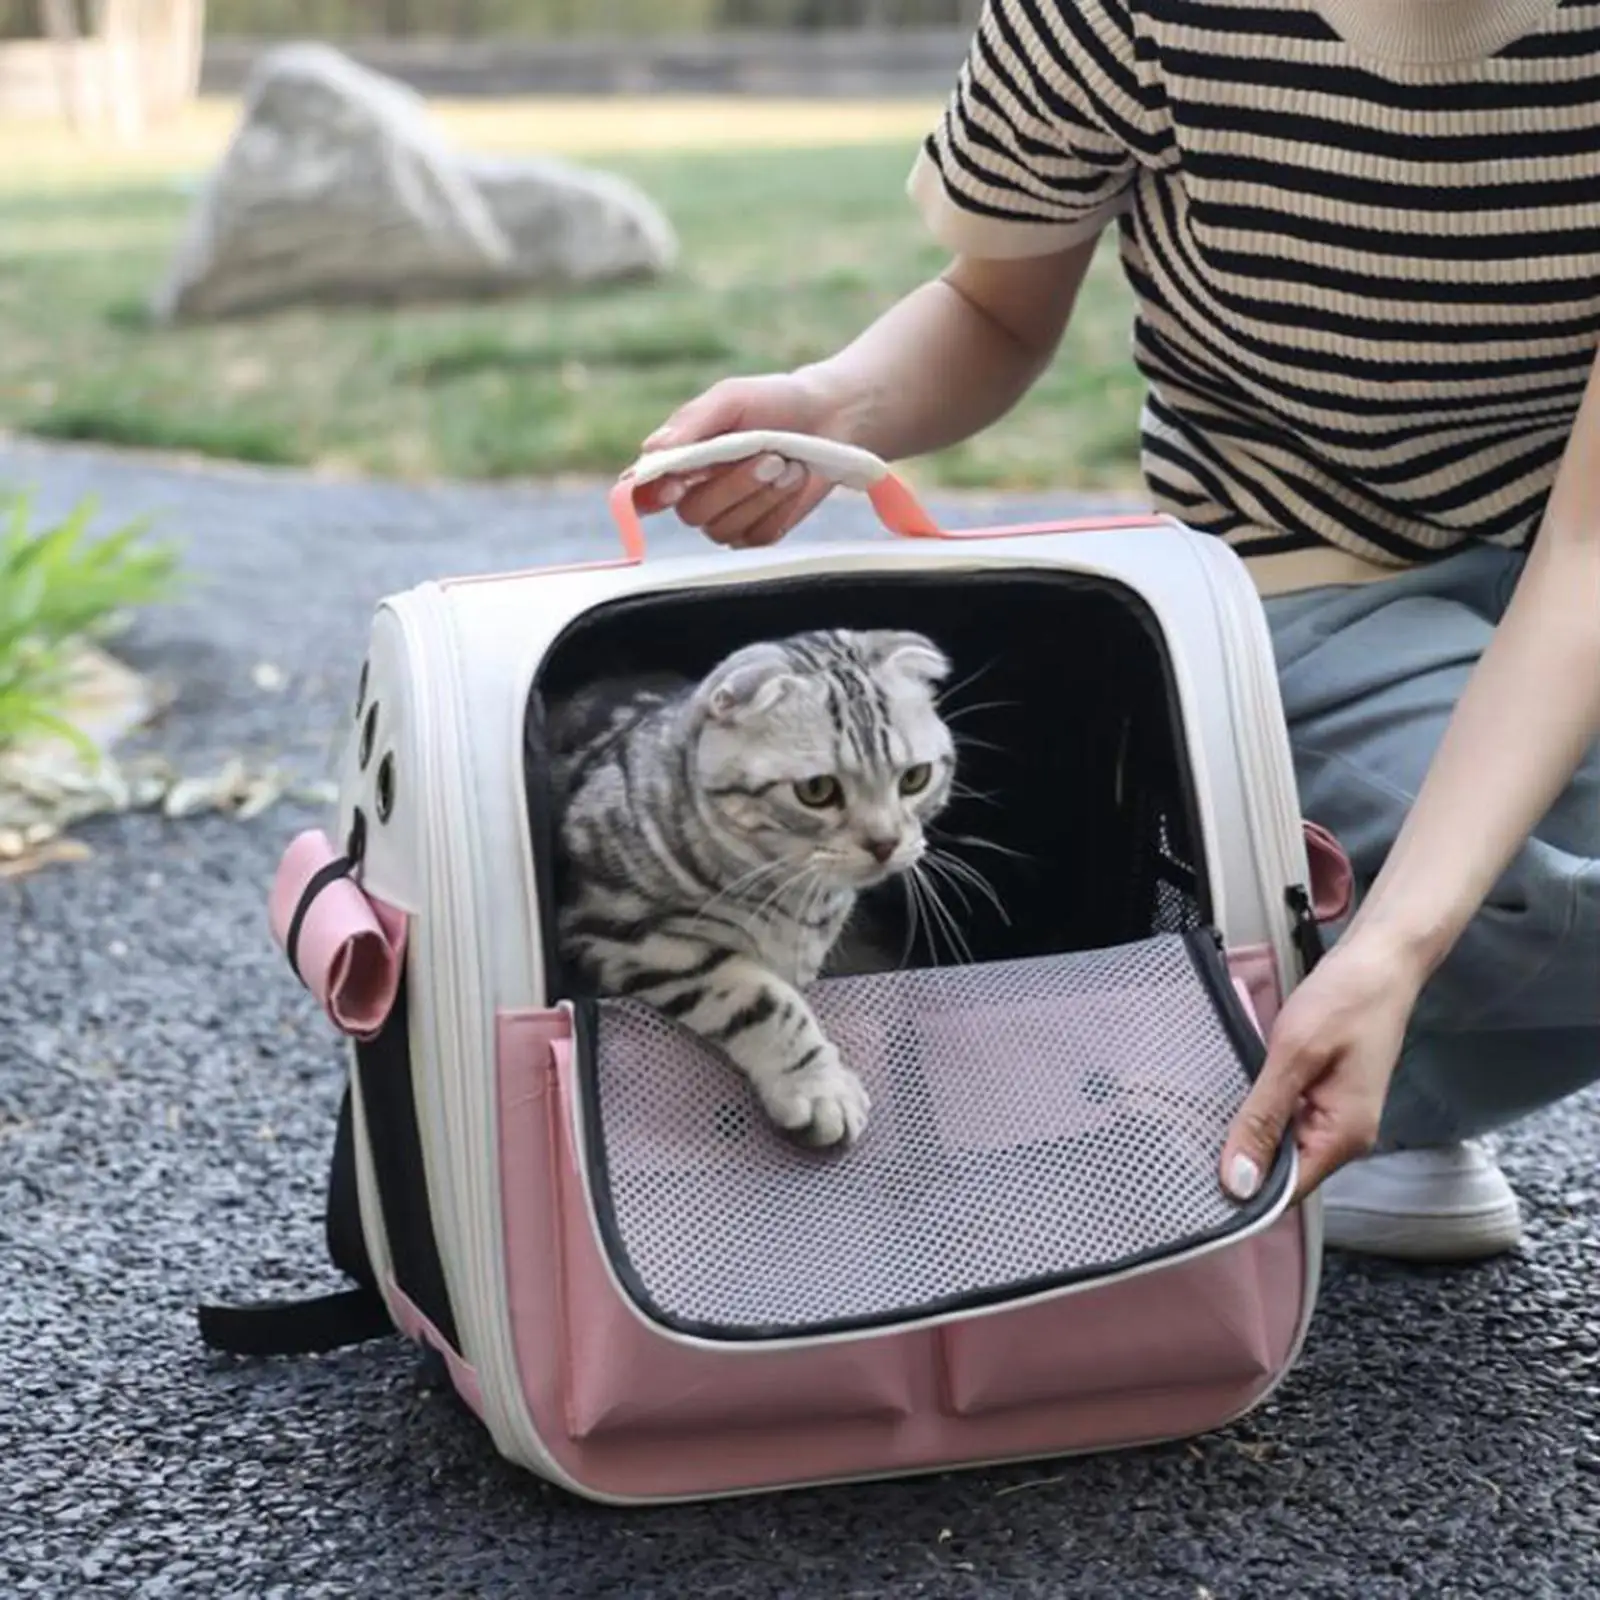 Pet Cat Carrier Backpack Ventilation Foldable Transport Multifunction Carrying Bag for Rabbits Outdoor Walking Traveling Hiking